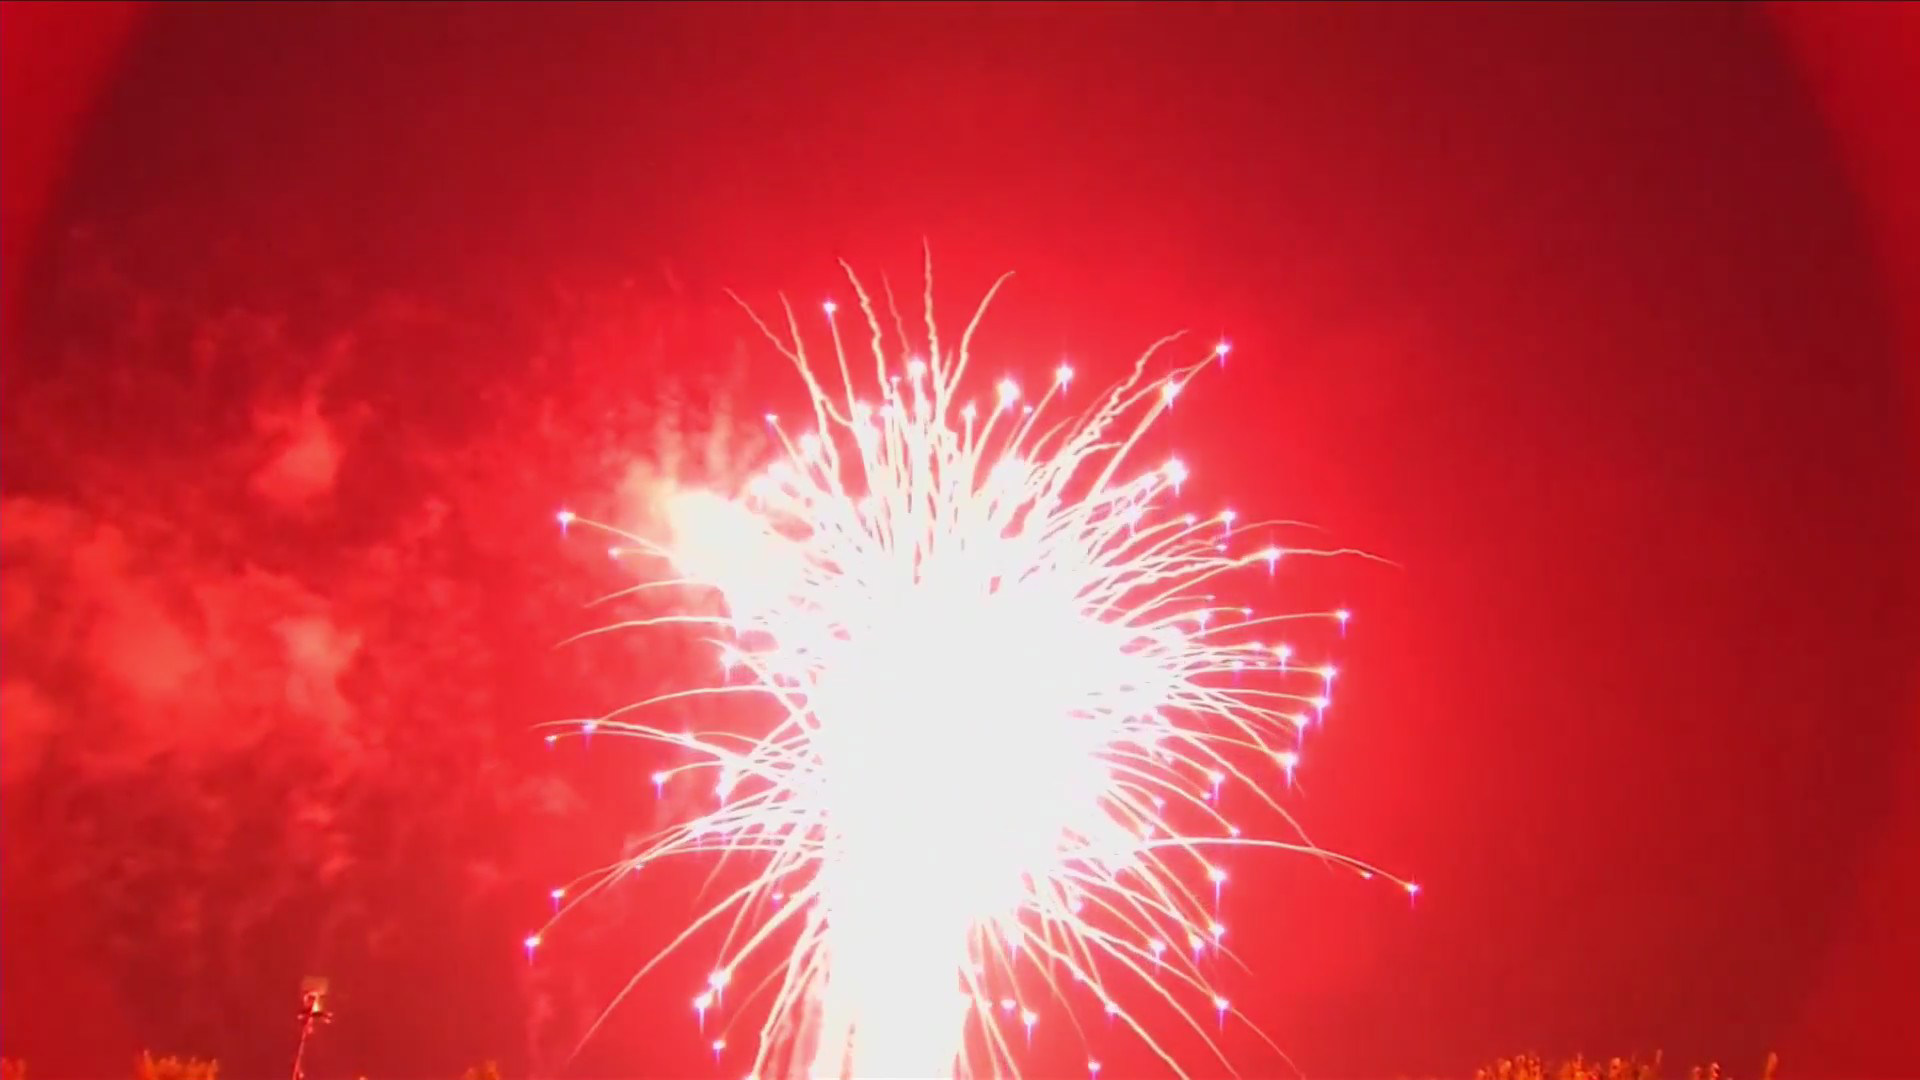 Sioux City Fireworks Ordinances